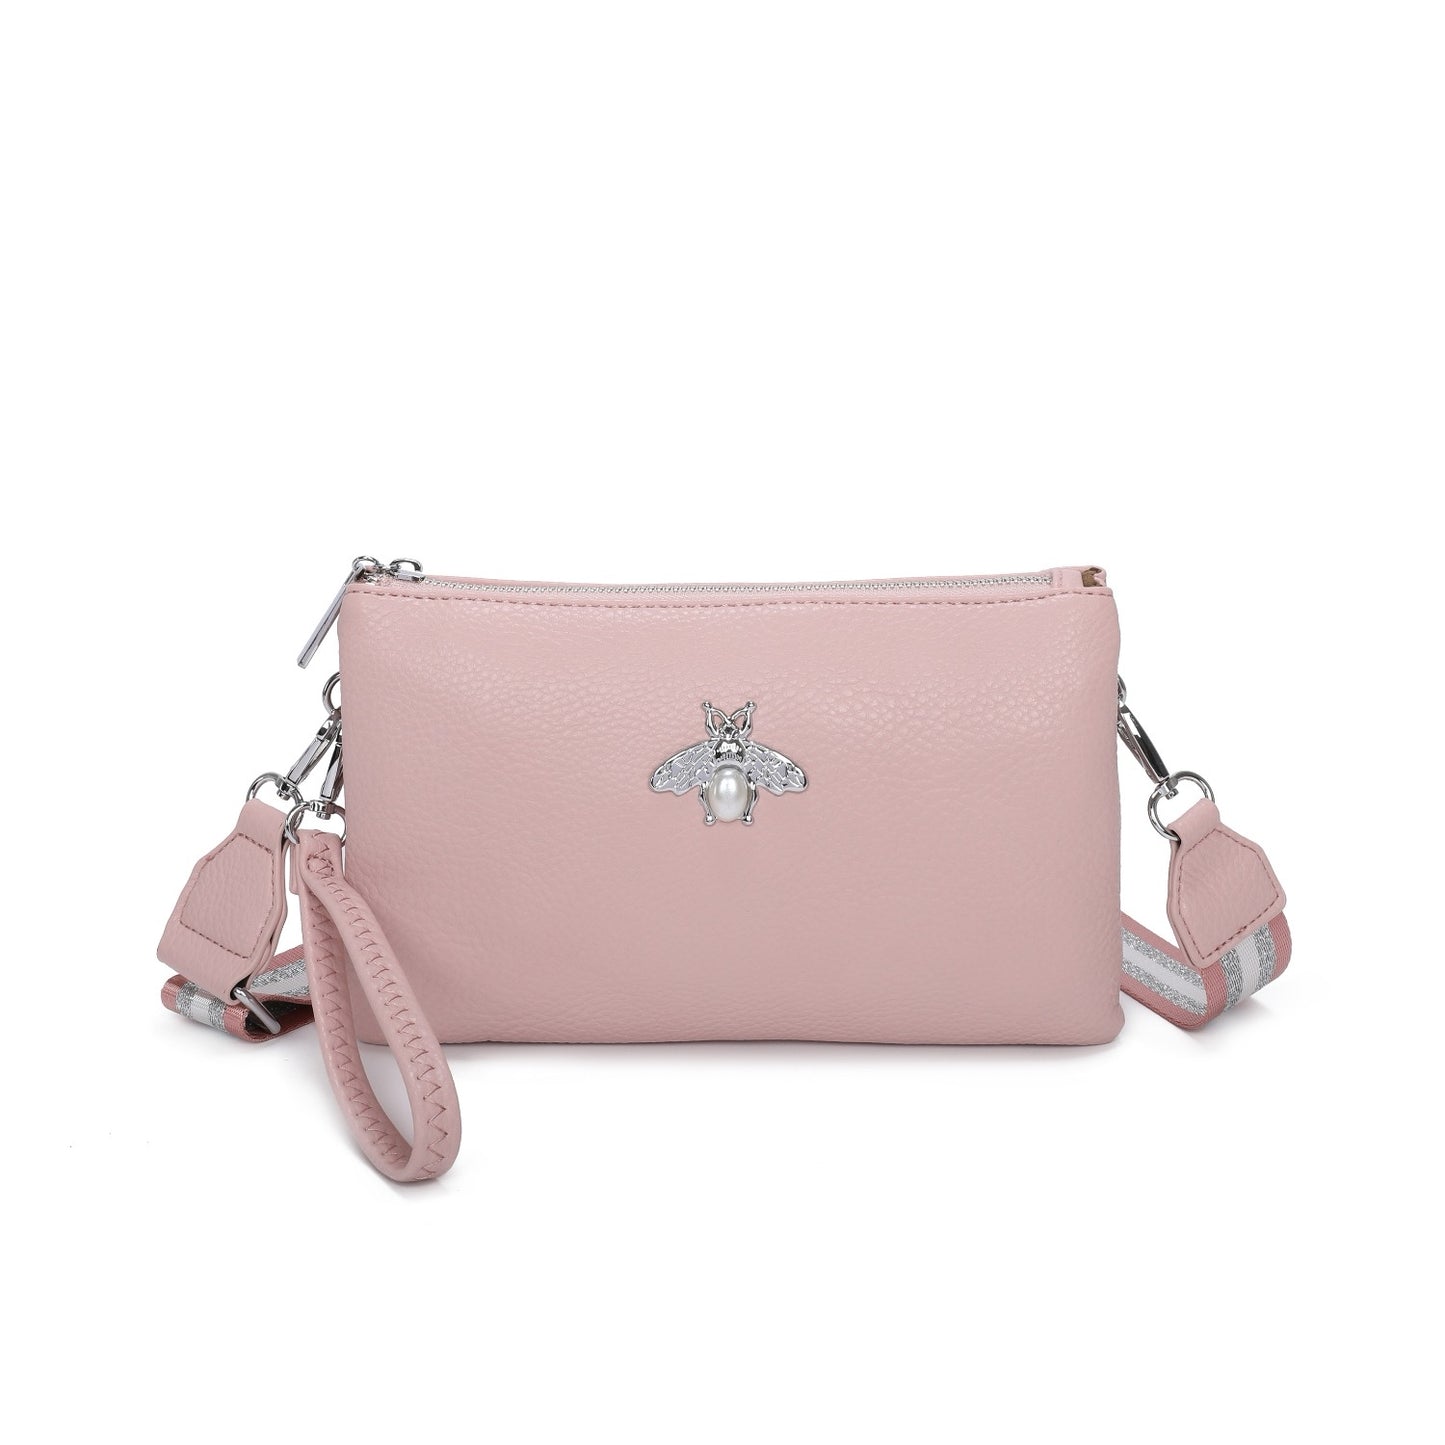 AZRA - Pink Bee Wristlets Crossbody Bag